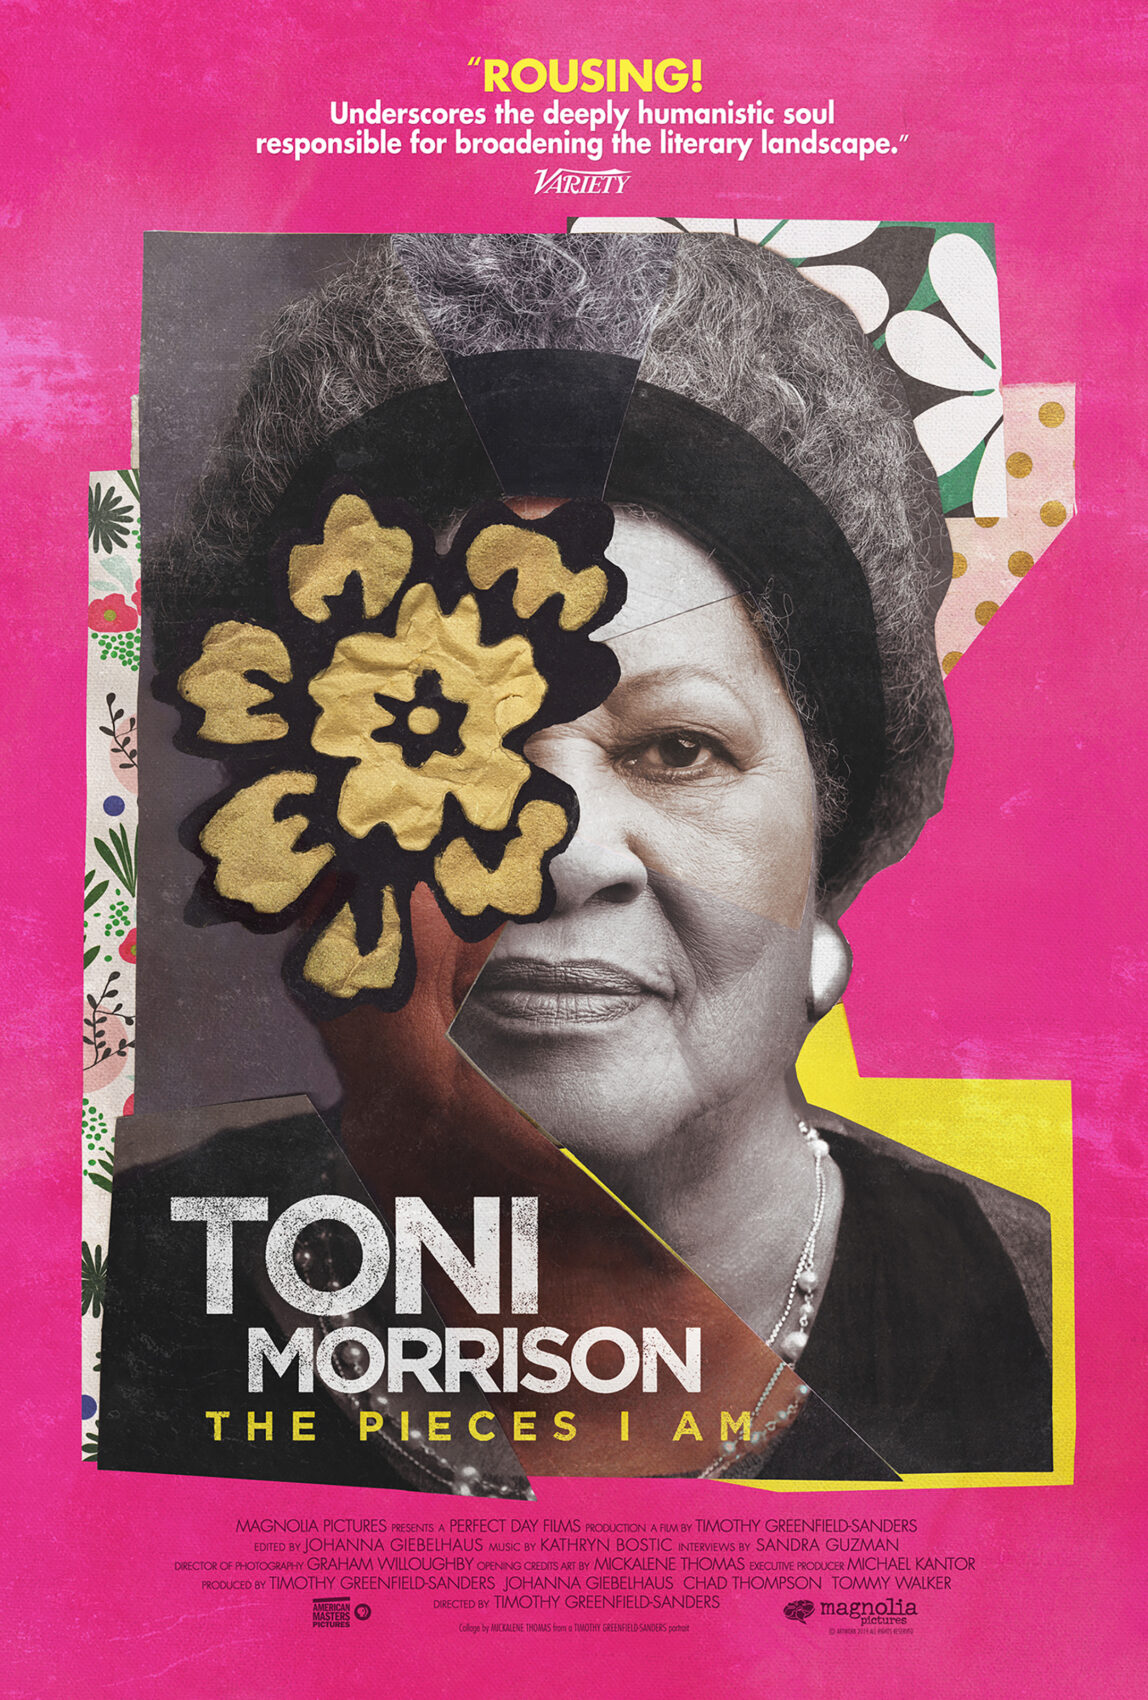 Toni Morrison © Magnolia Pictures